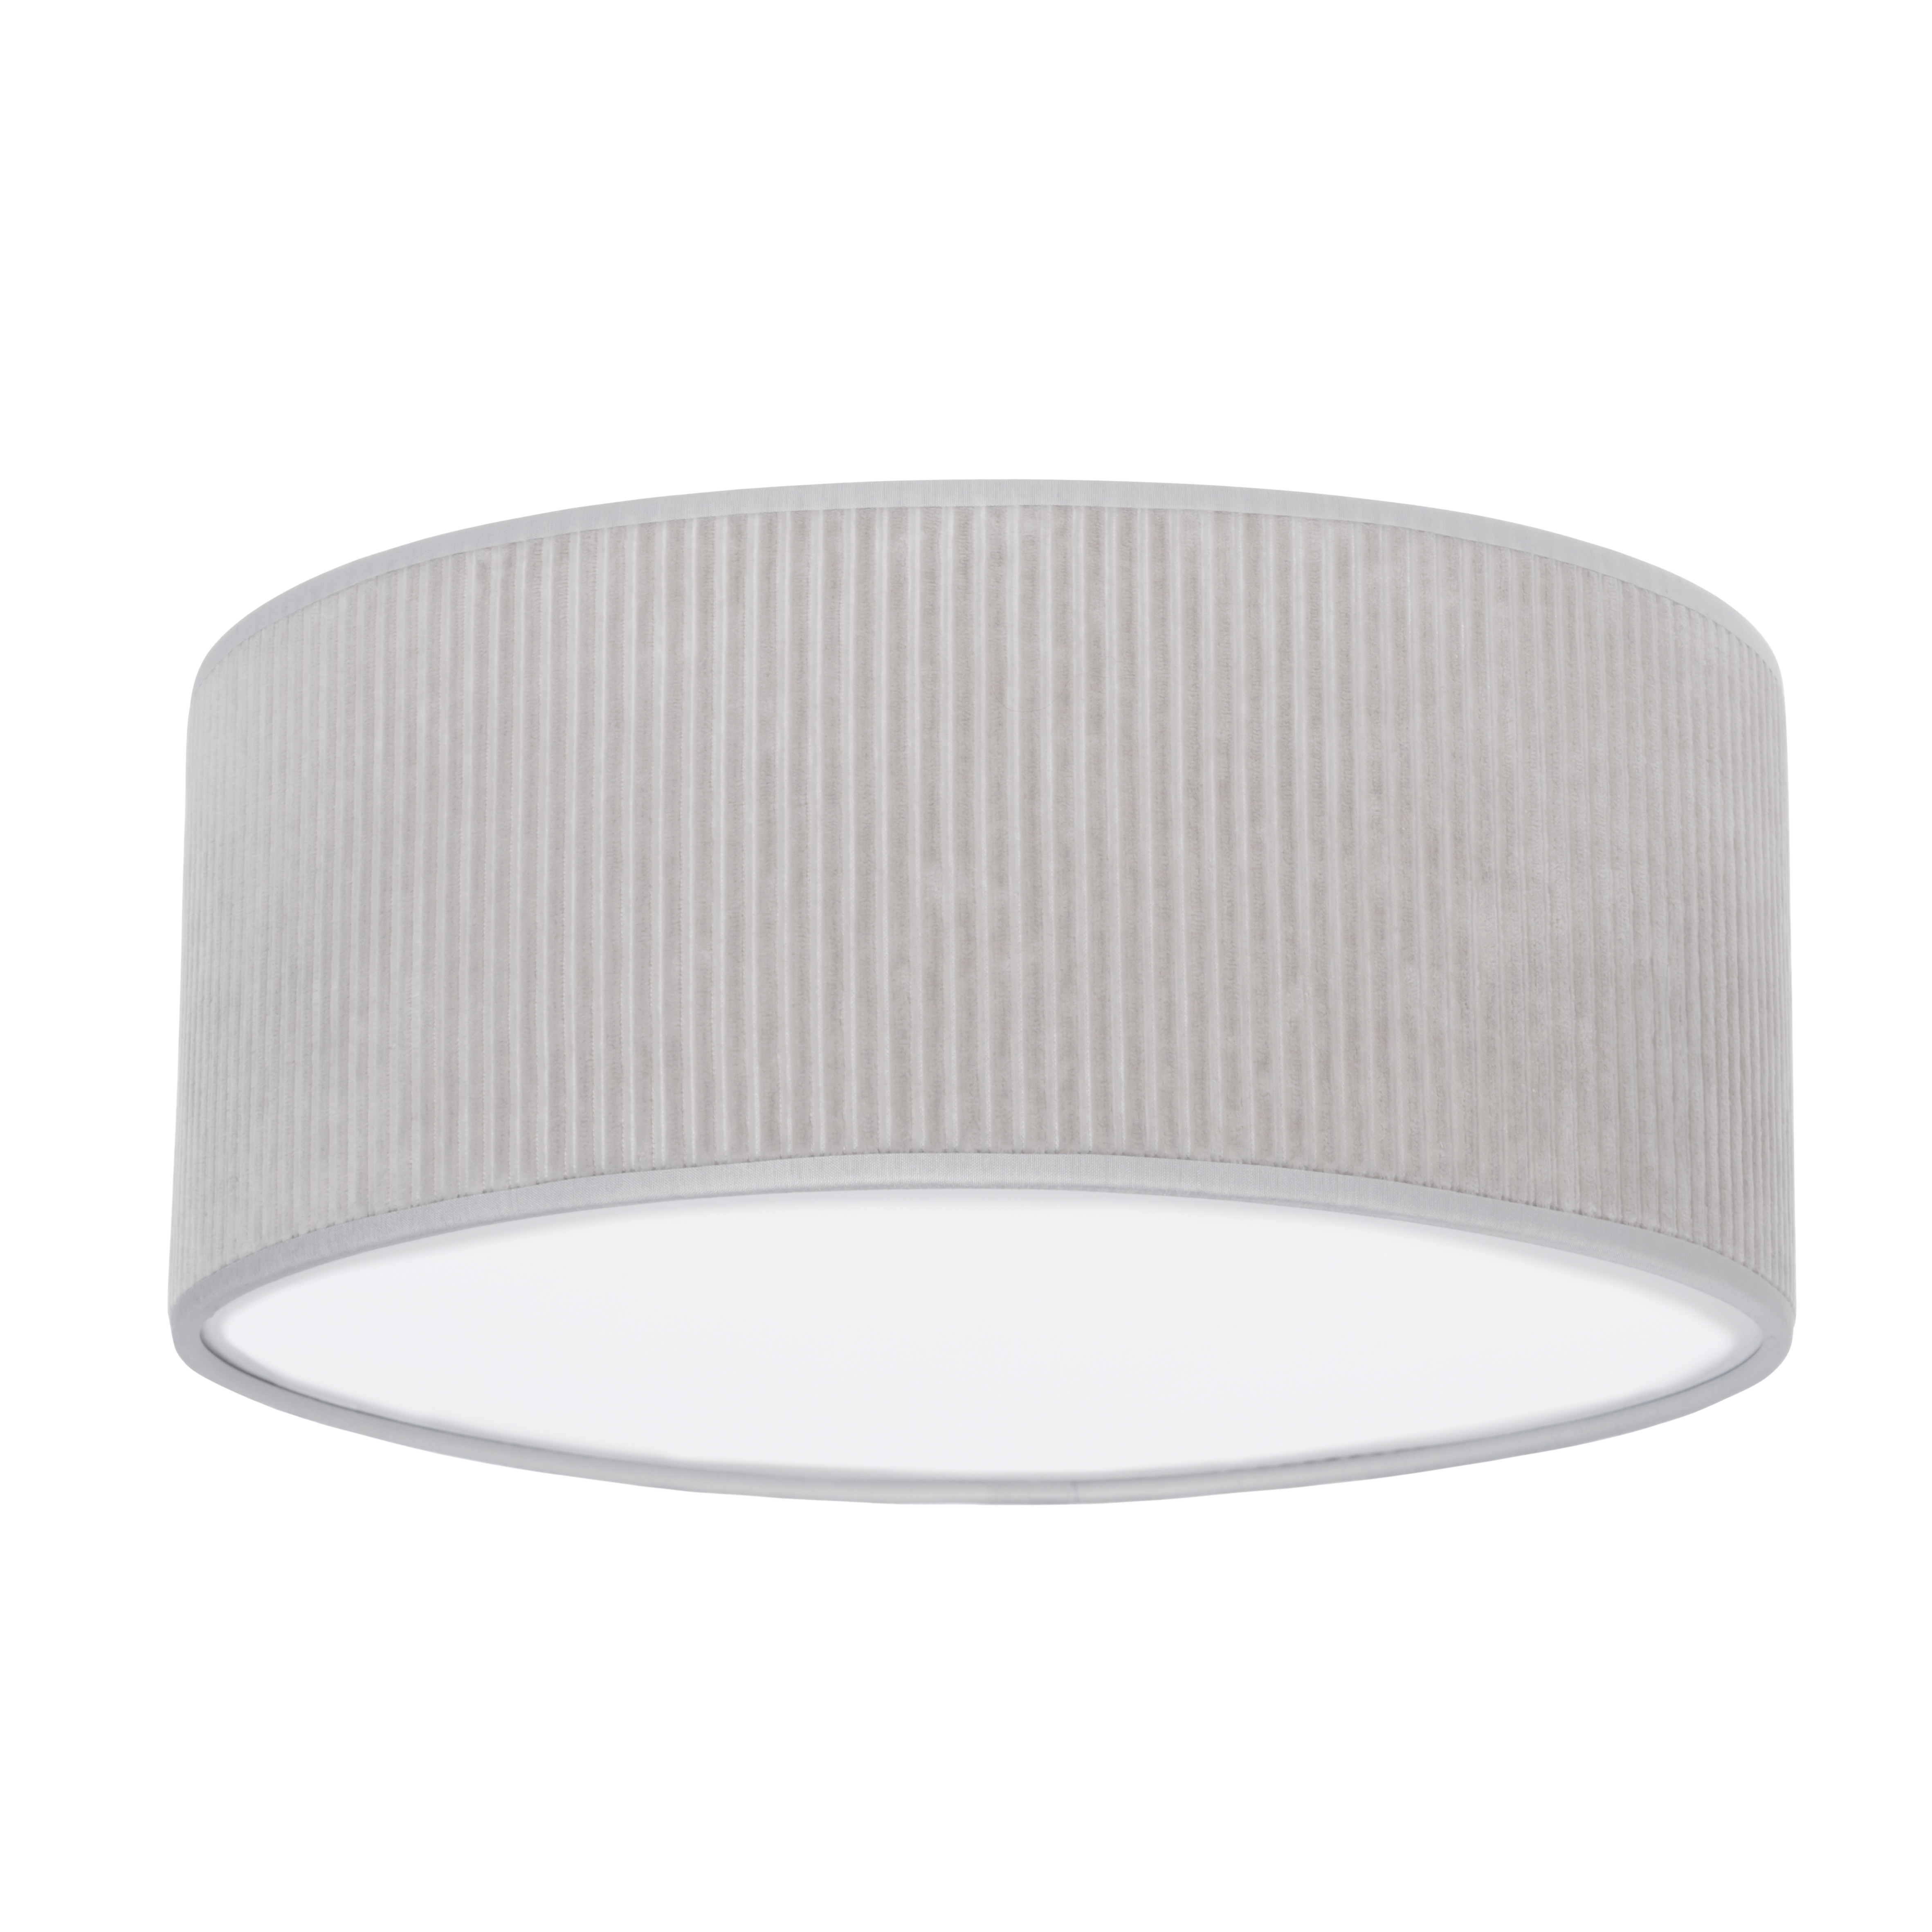 Ceiling lamp Sense pebble grey - Ø35 cm